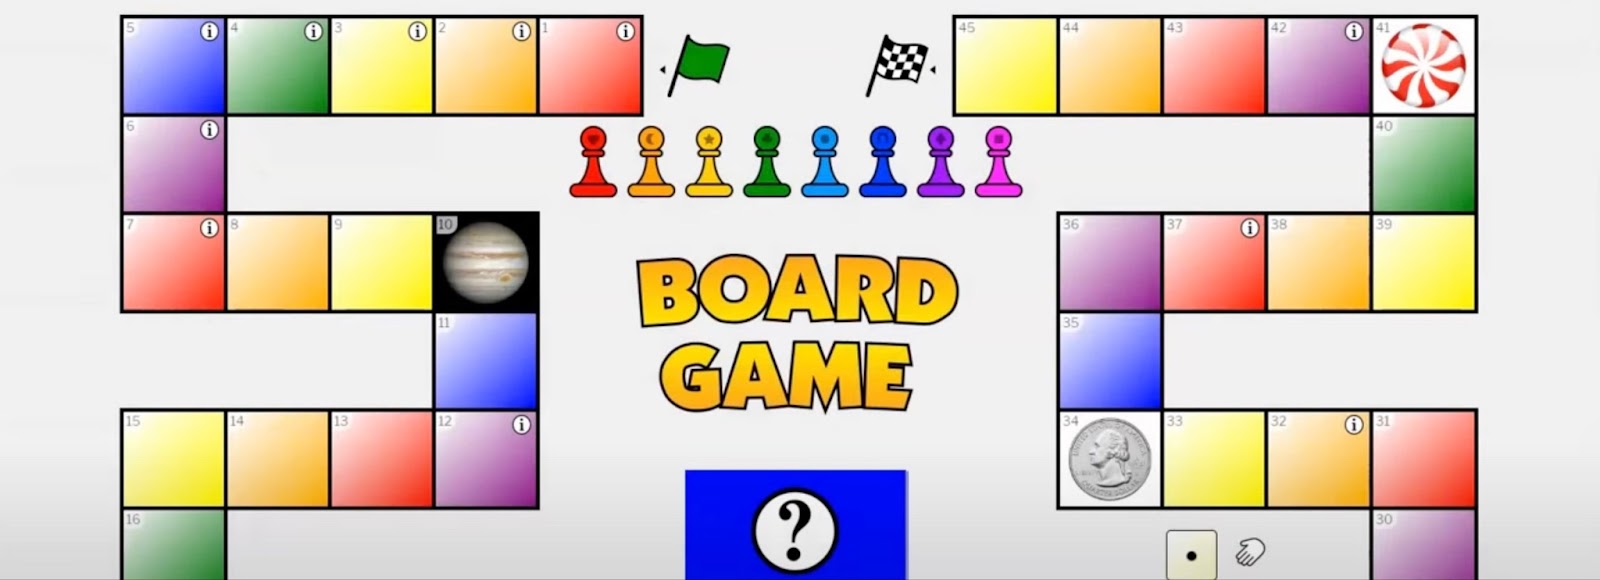 “Board Game” inscription on the game board